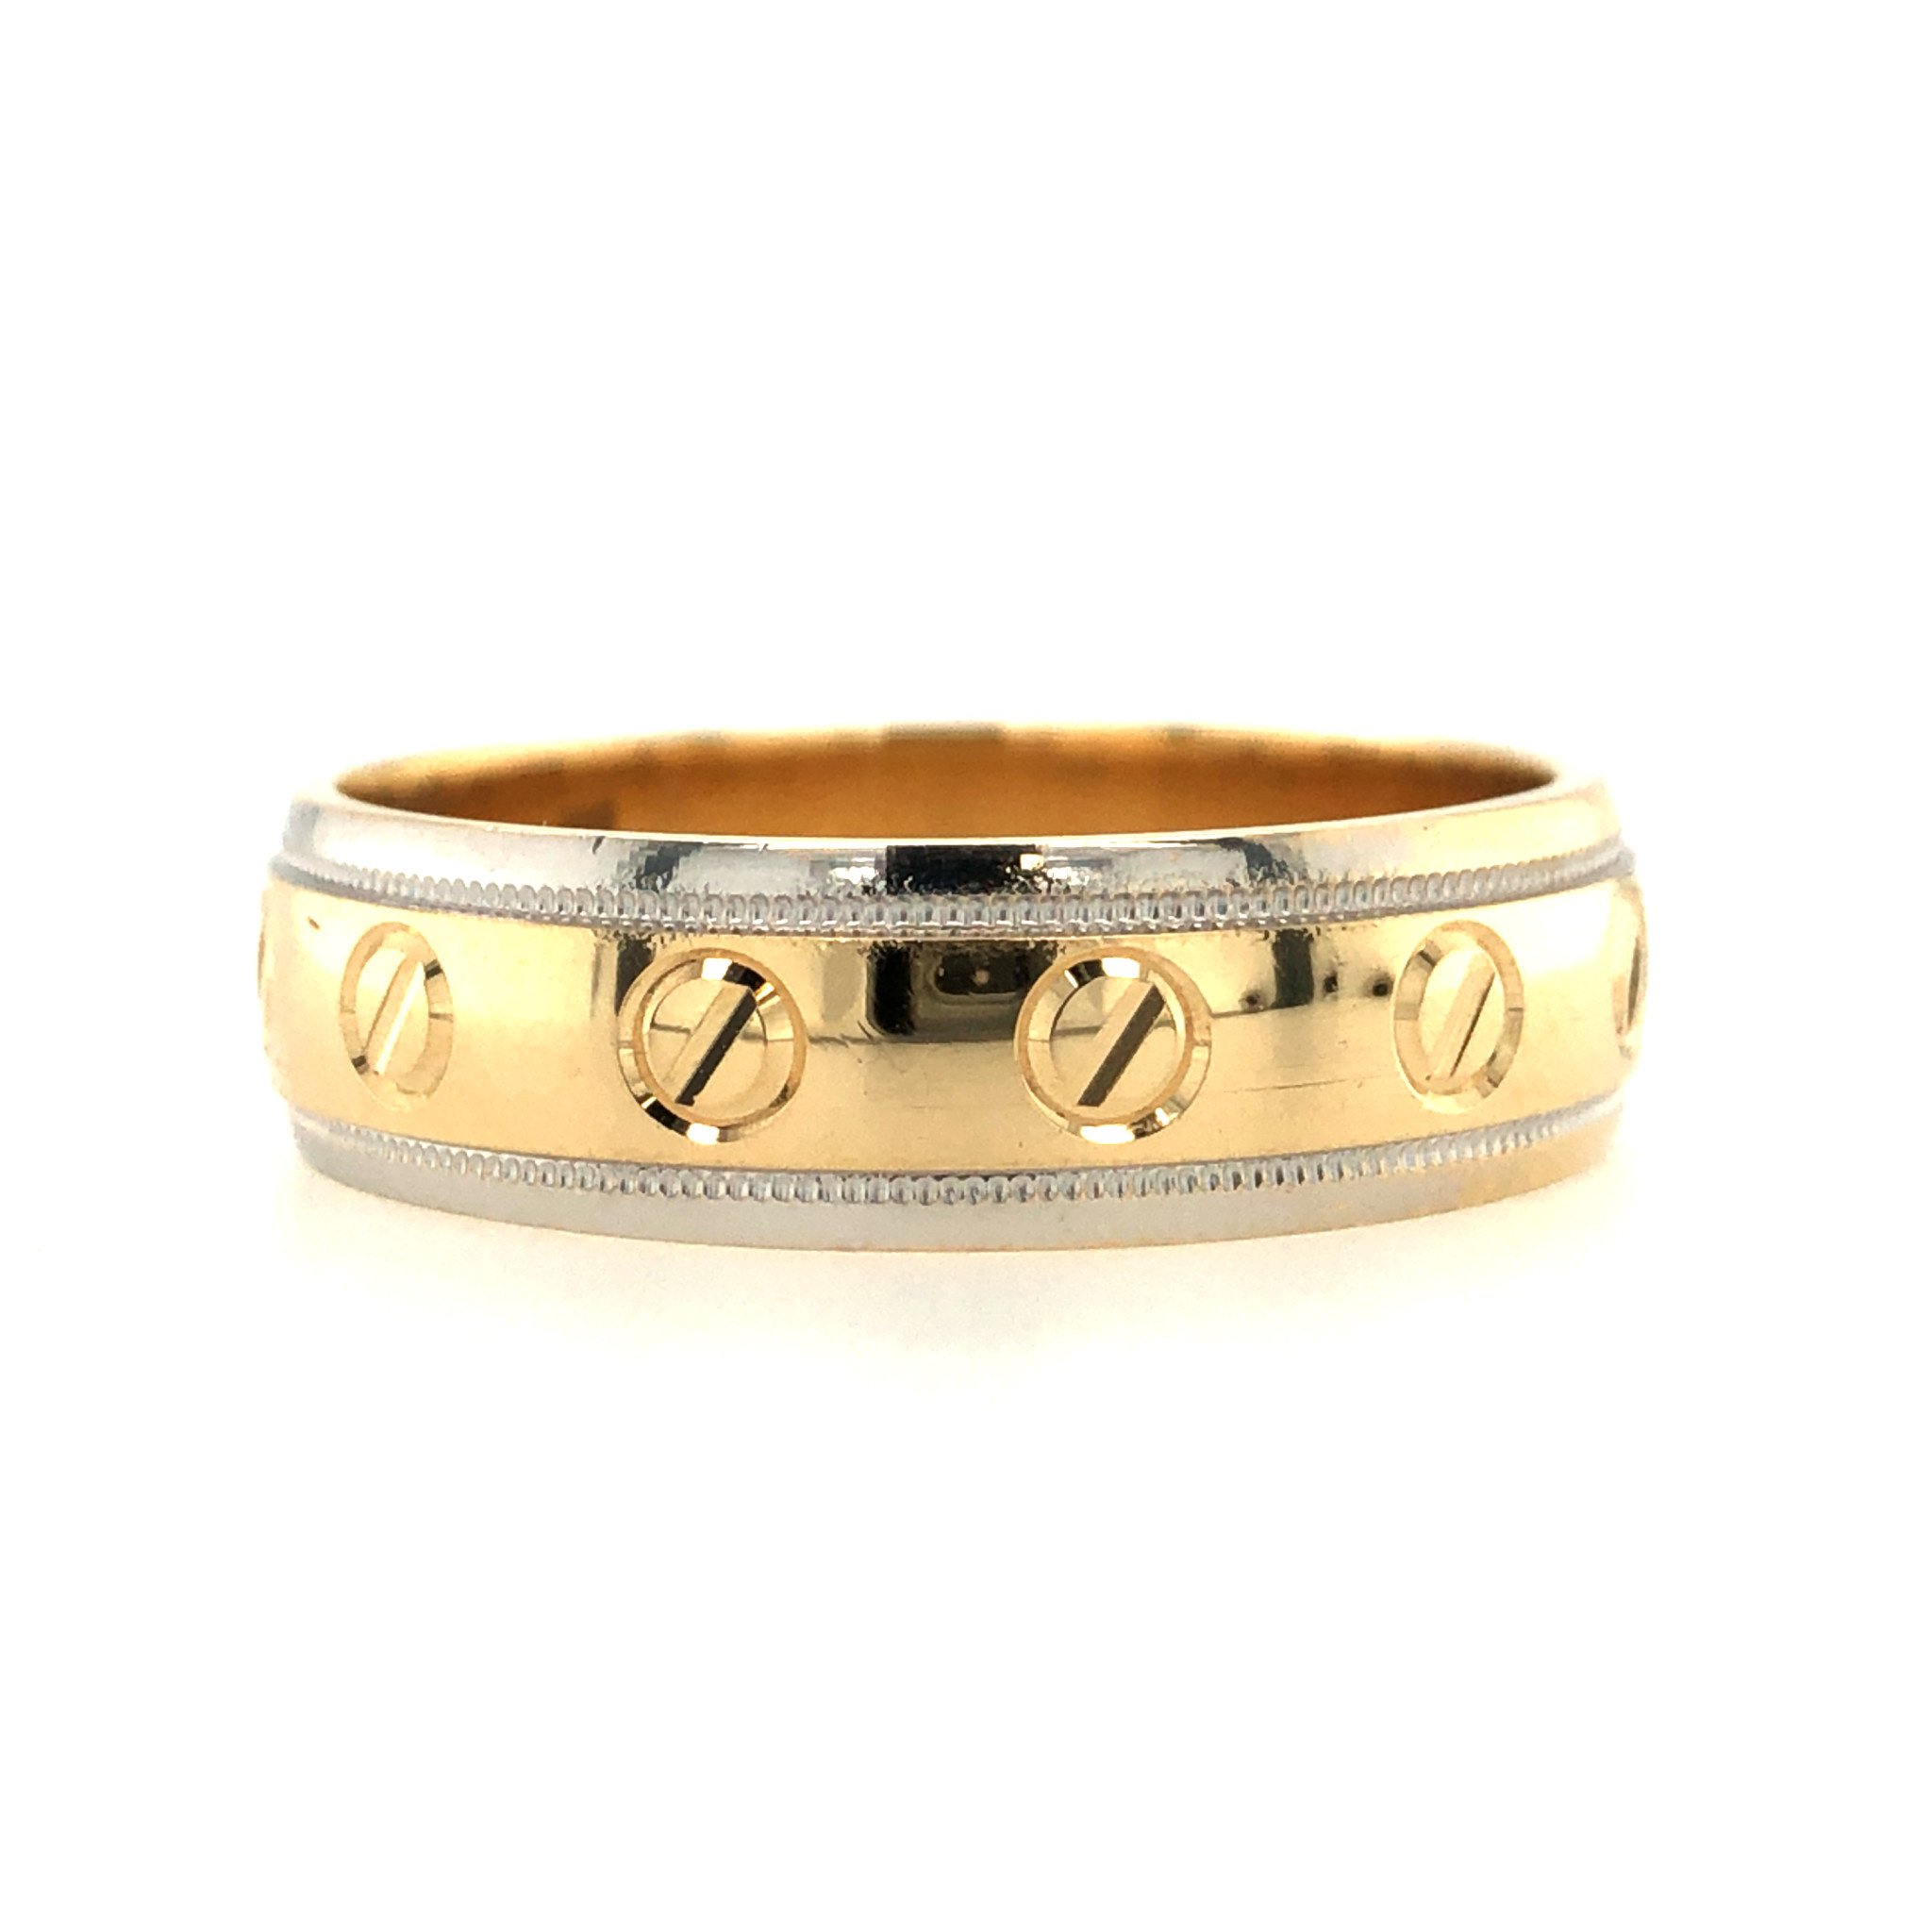 Cartier Inspired Wedding Ring Set - HH-104 - 14K Gold